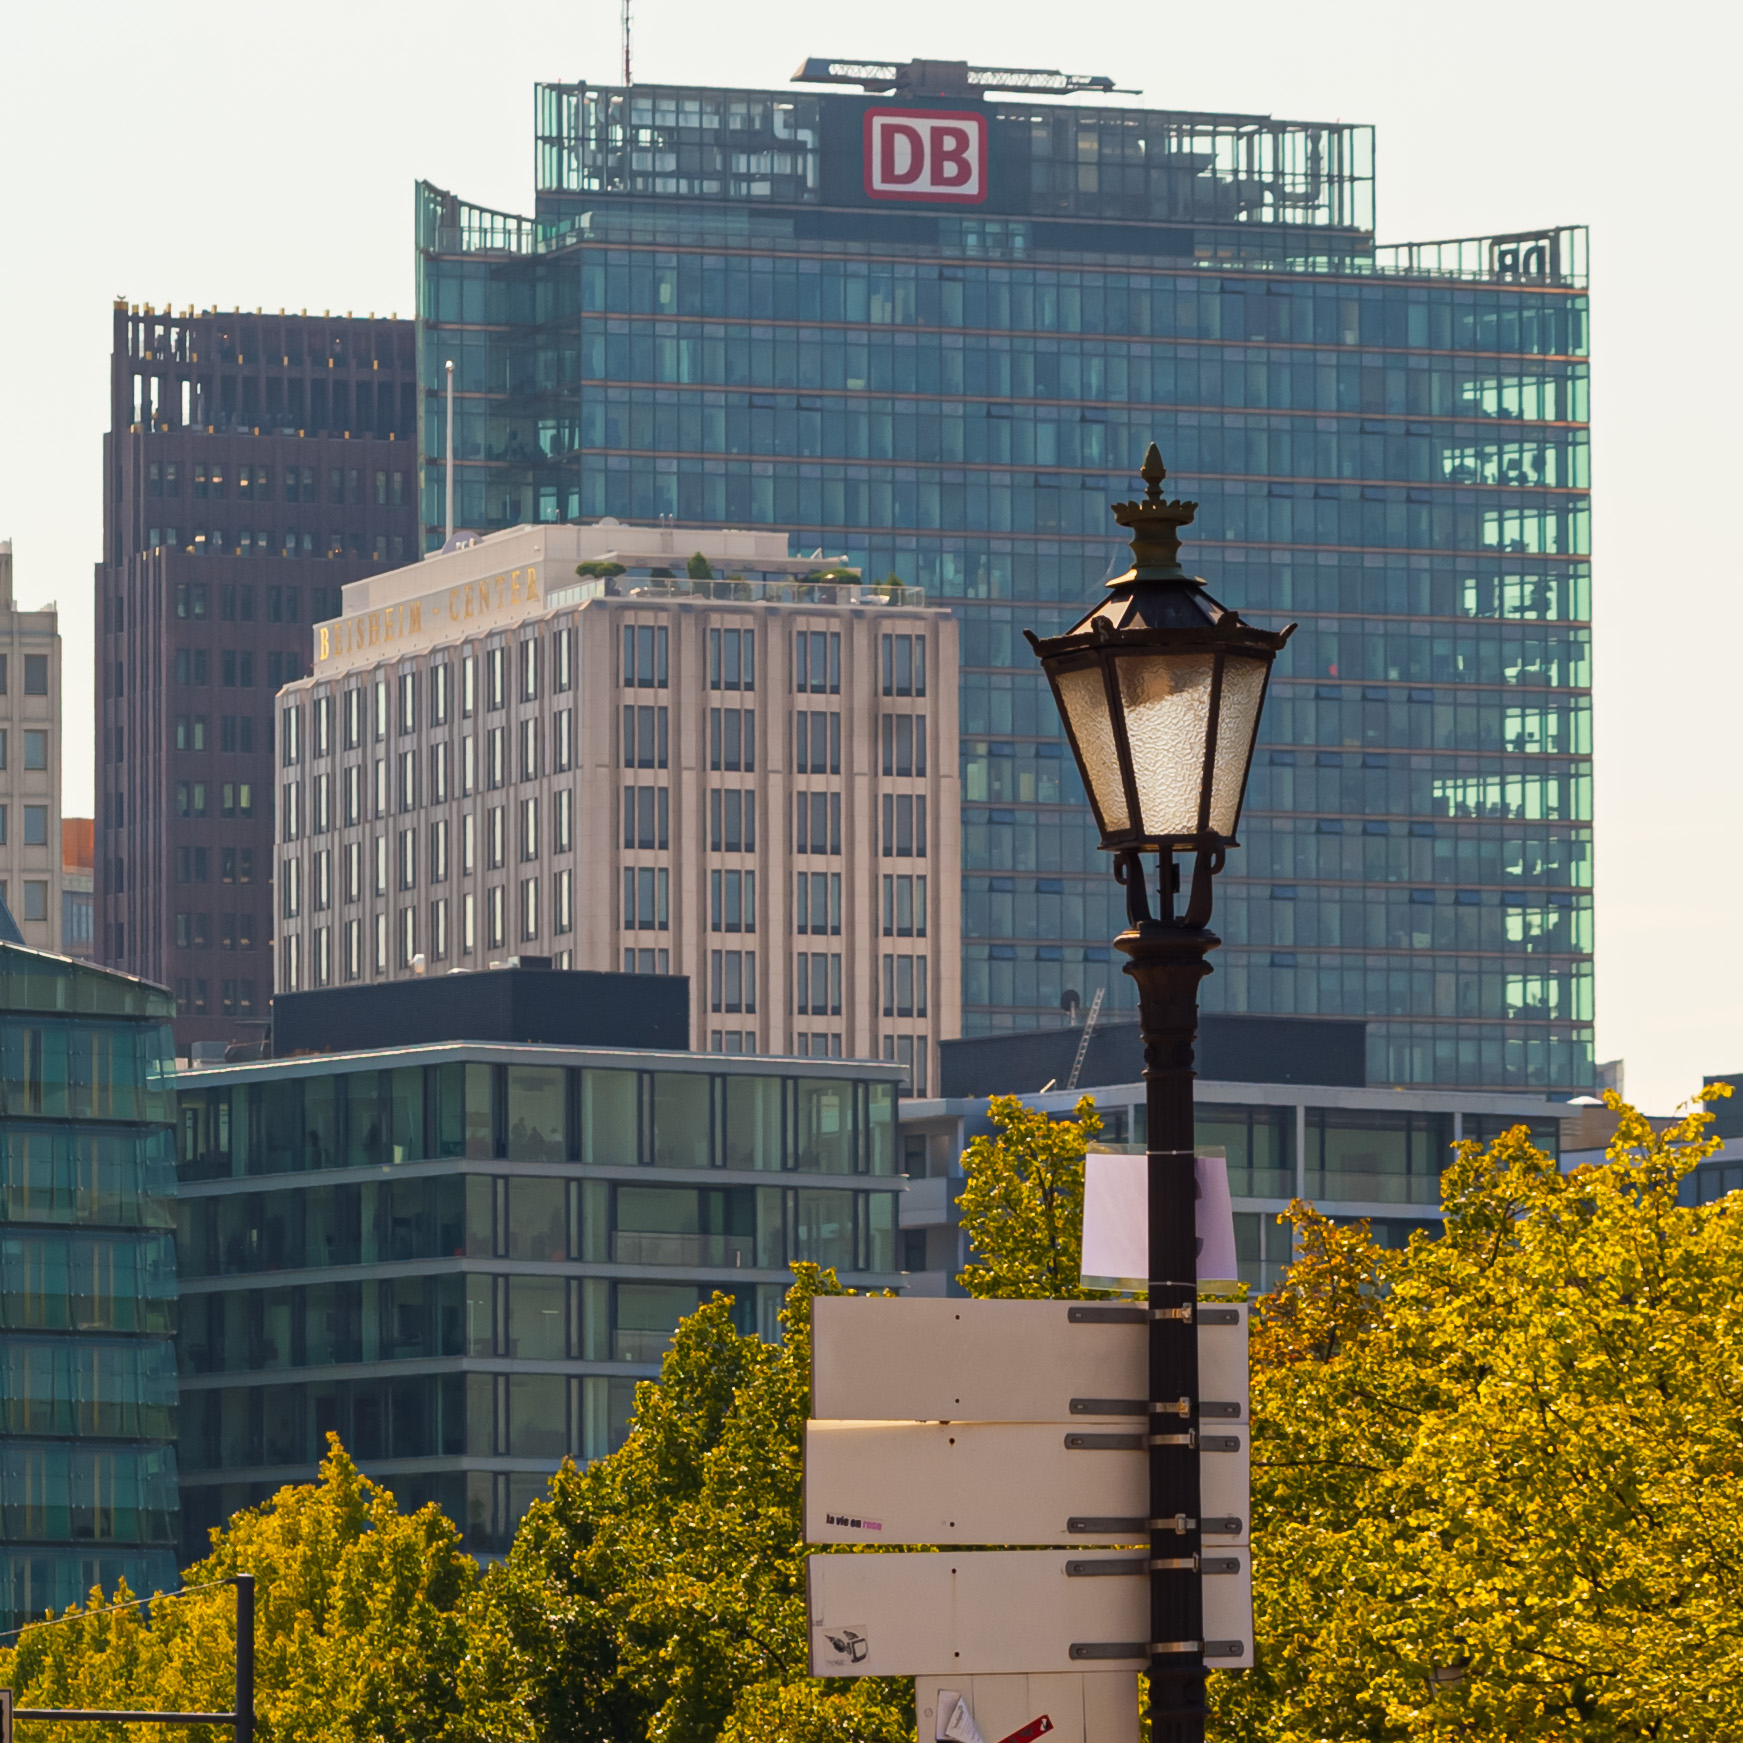 Berlin - View of the Potsdamer Platz district